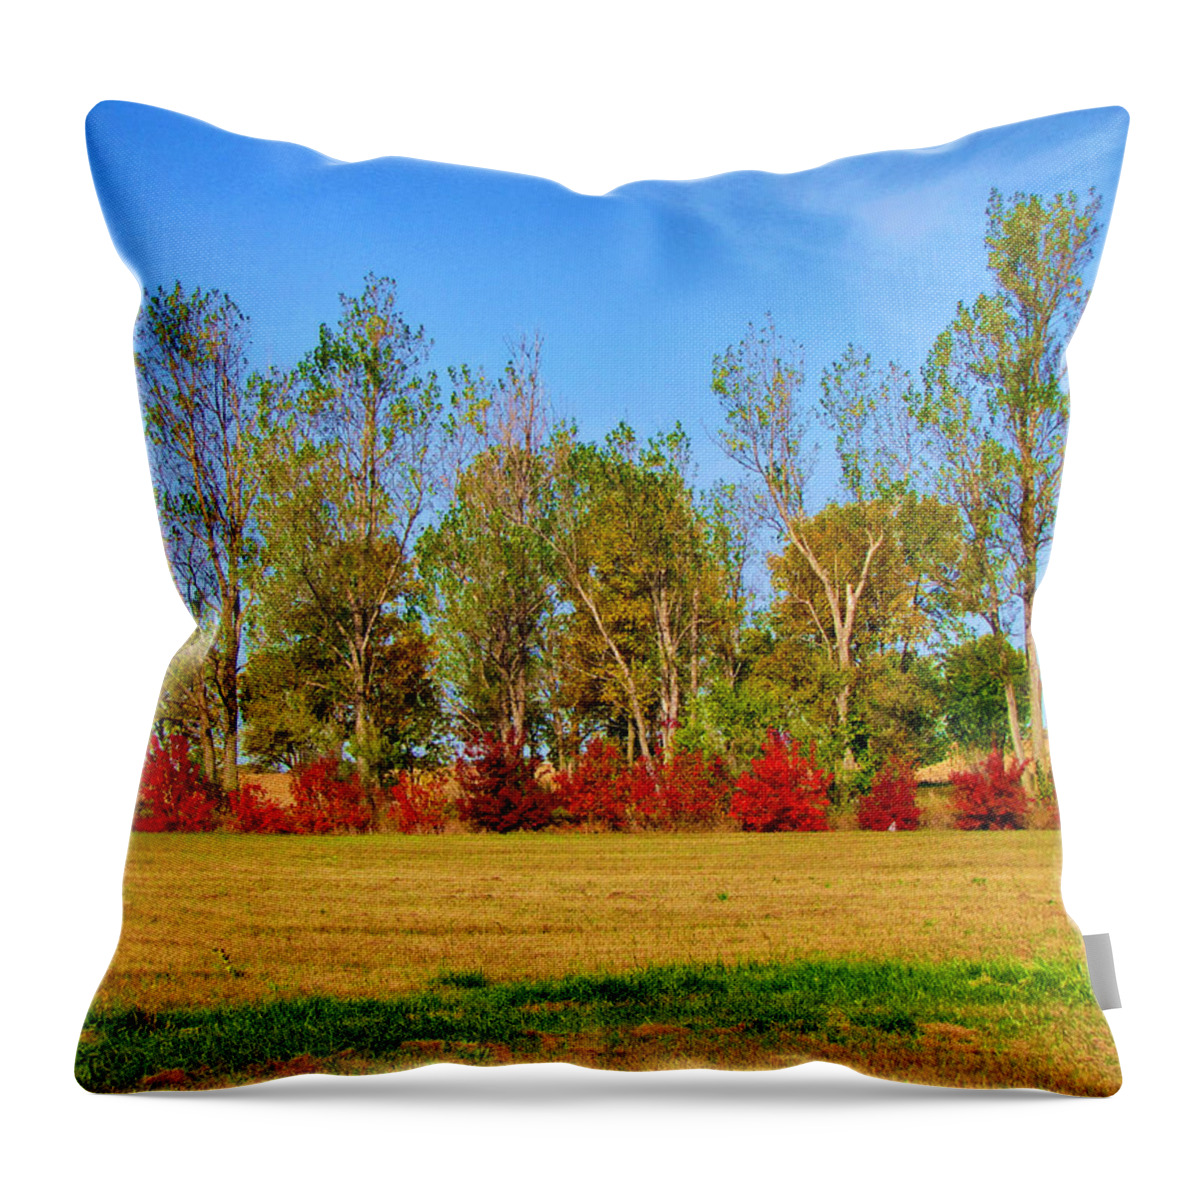 Autumn Throw Pillow featuring the photograph Autumn Spectacular by Maciek Froncisz